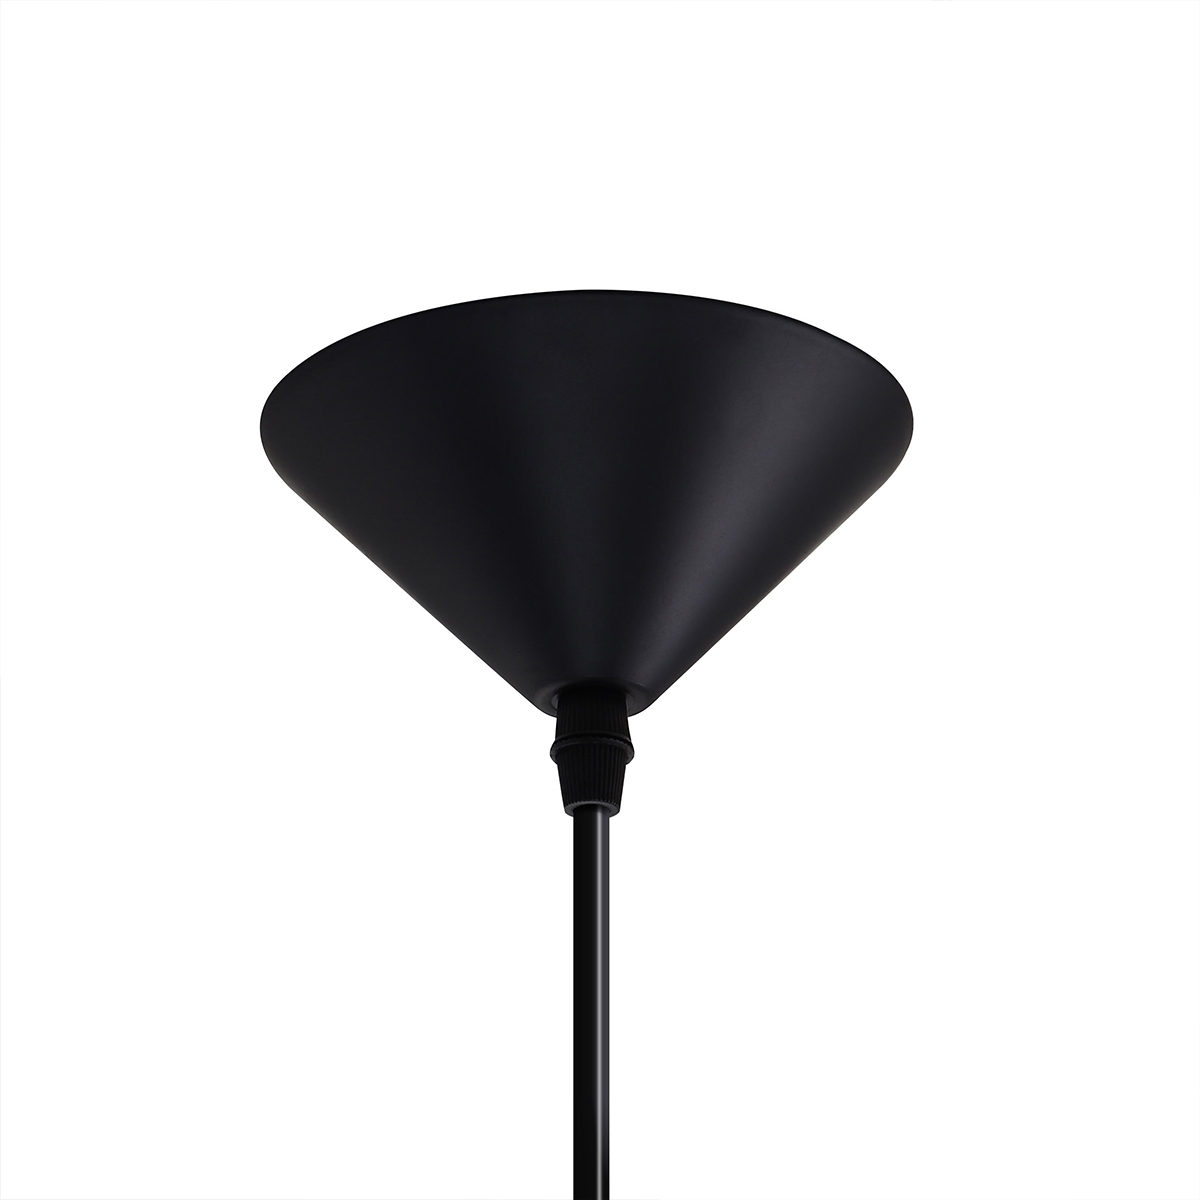 Lámpara colgante moderna minimalista de aluminio, color negro